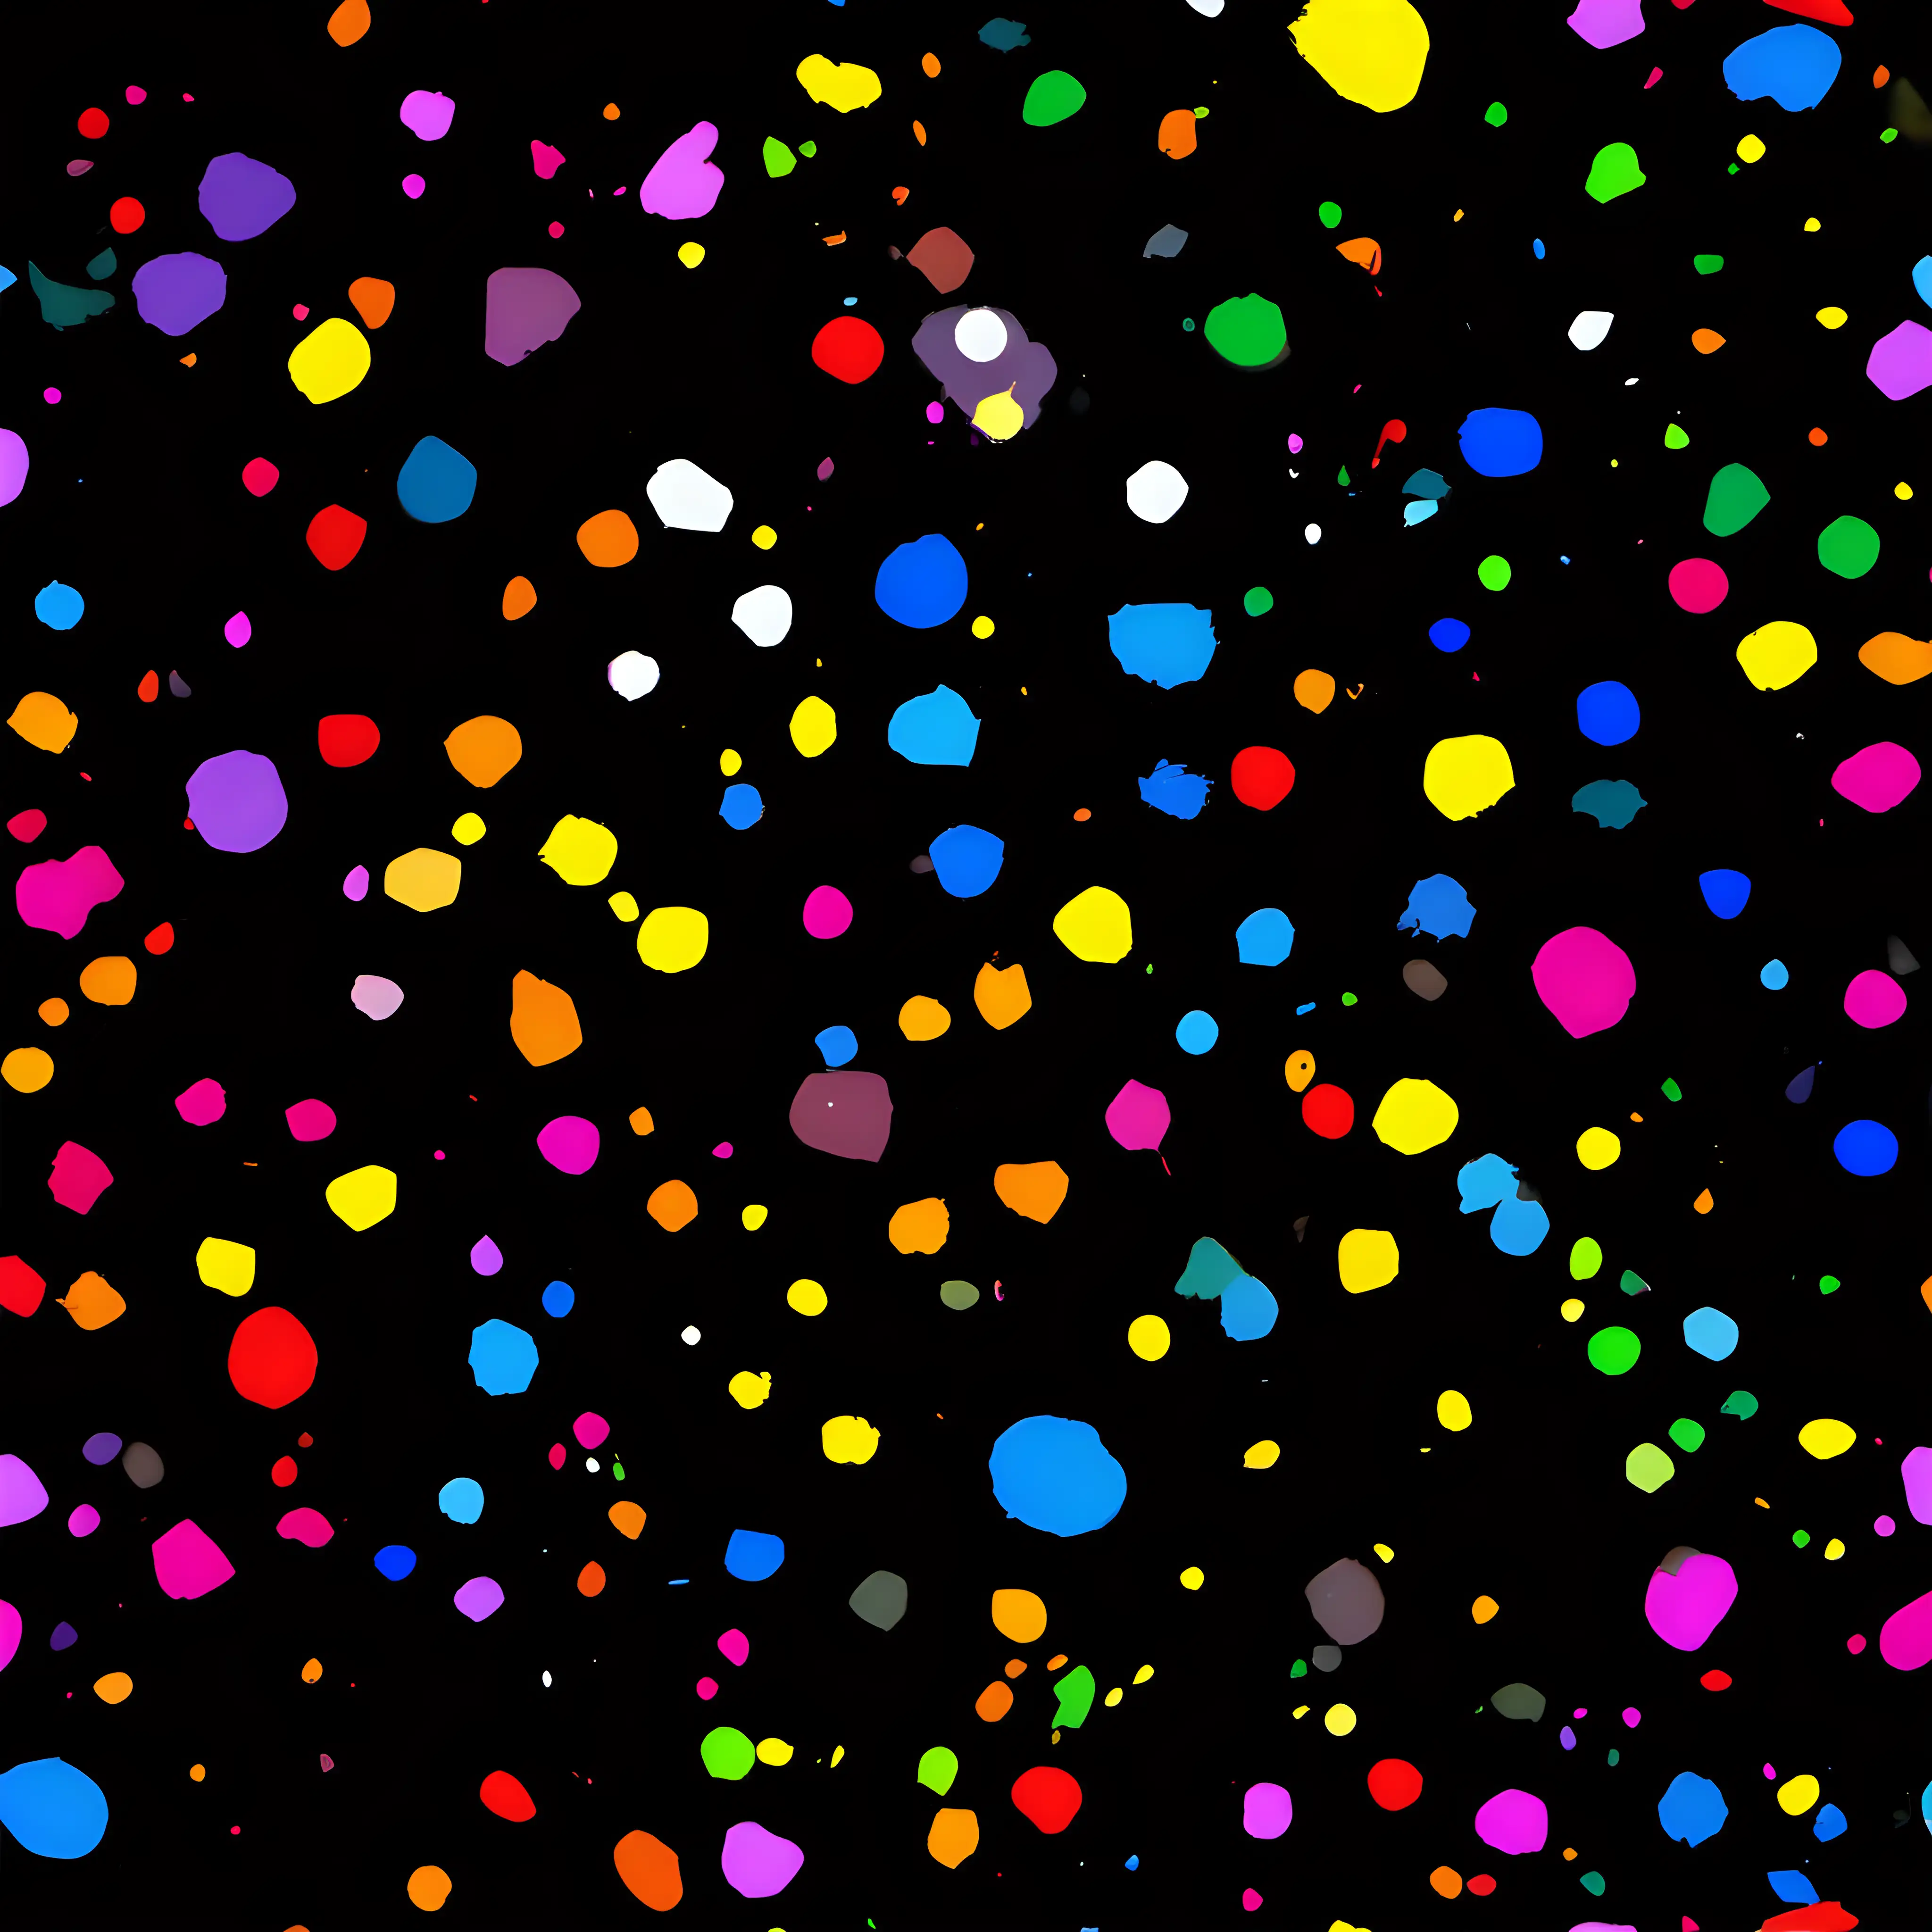 Vibrant Multicolored Paint Specks on Black Canvas